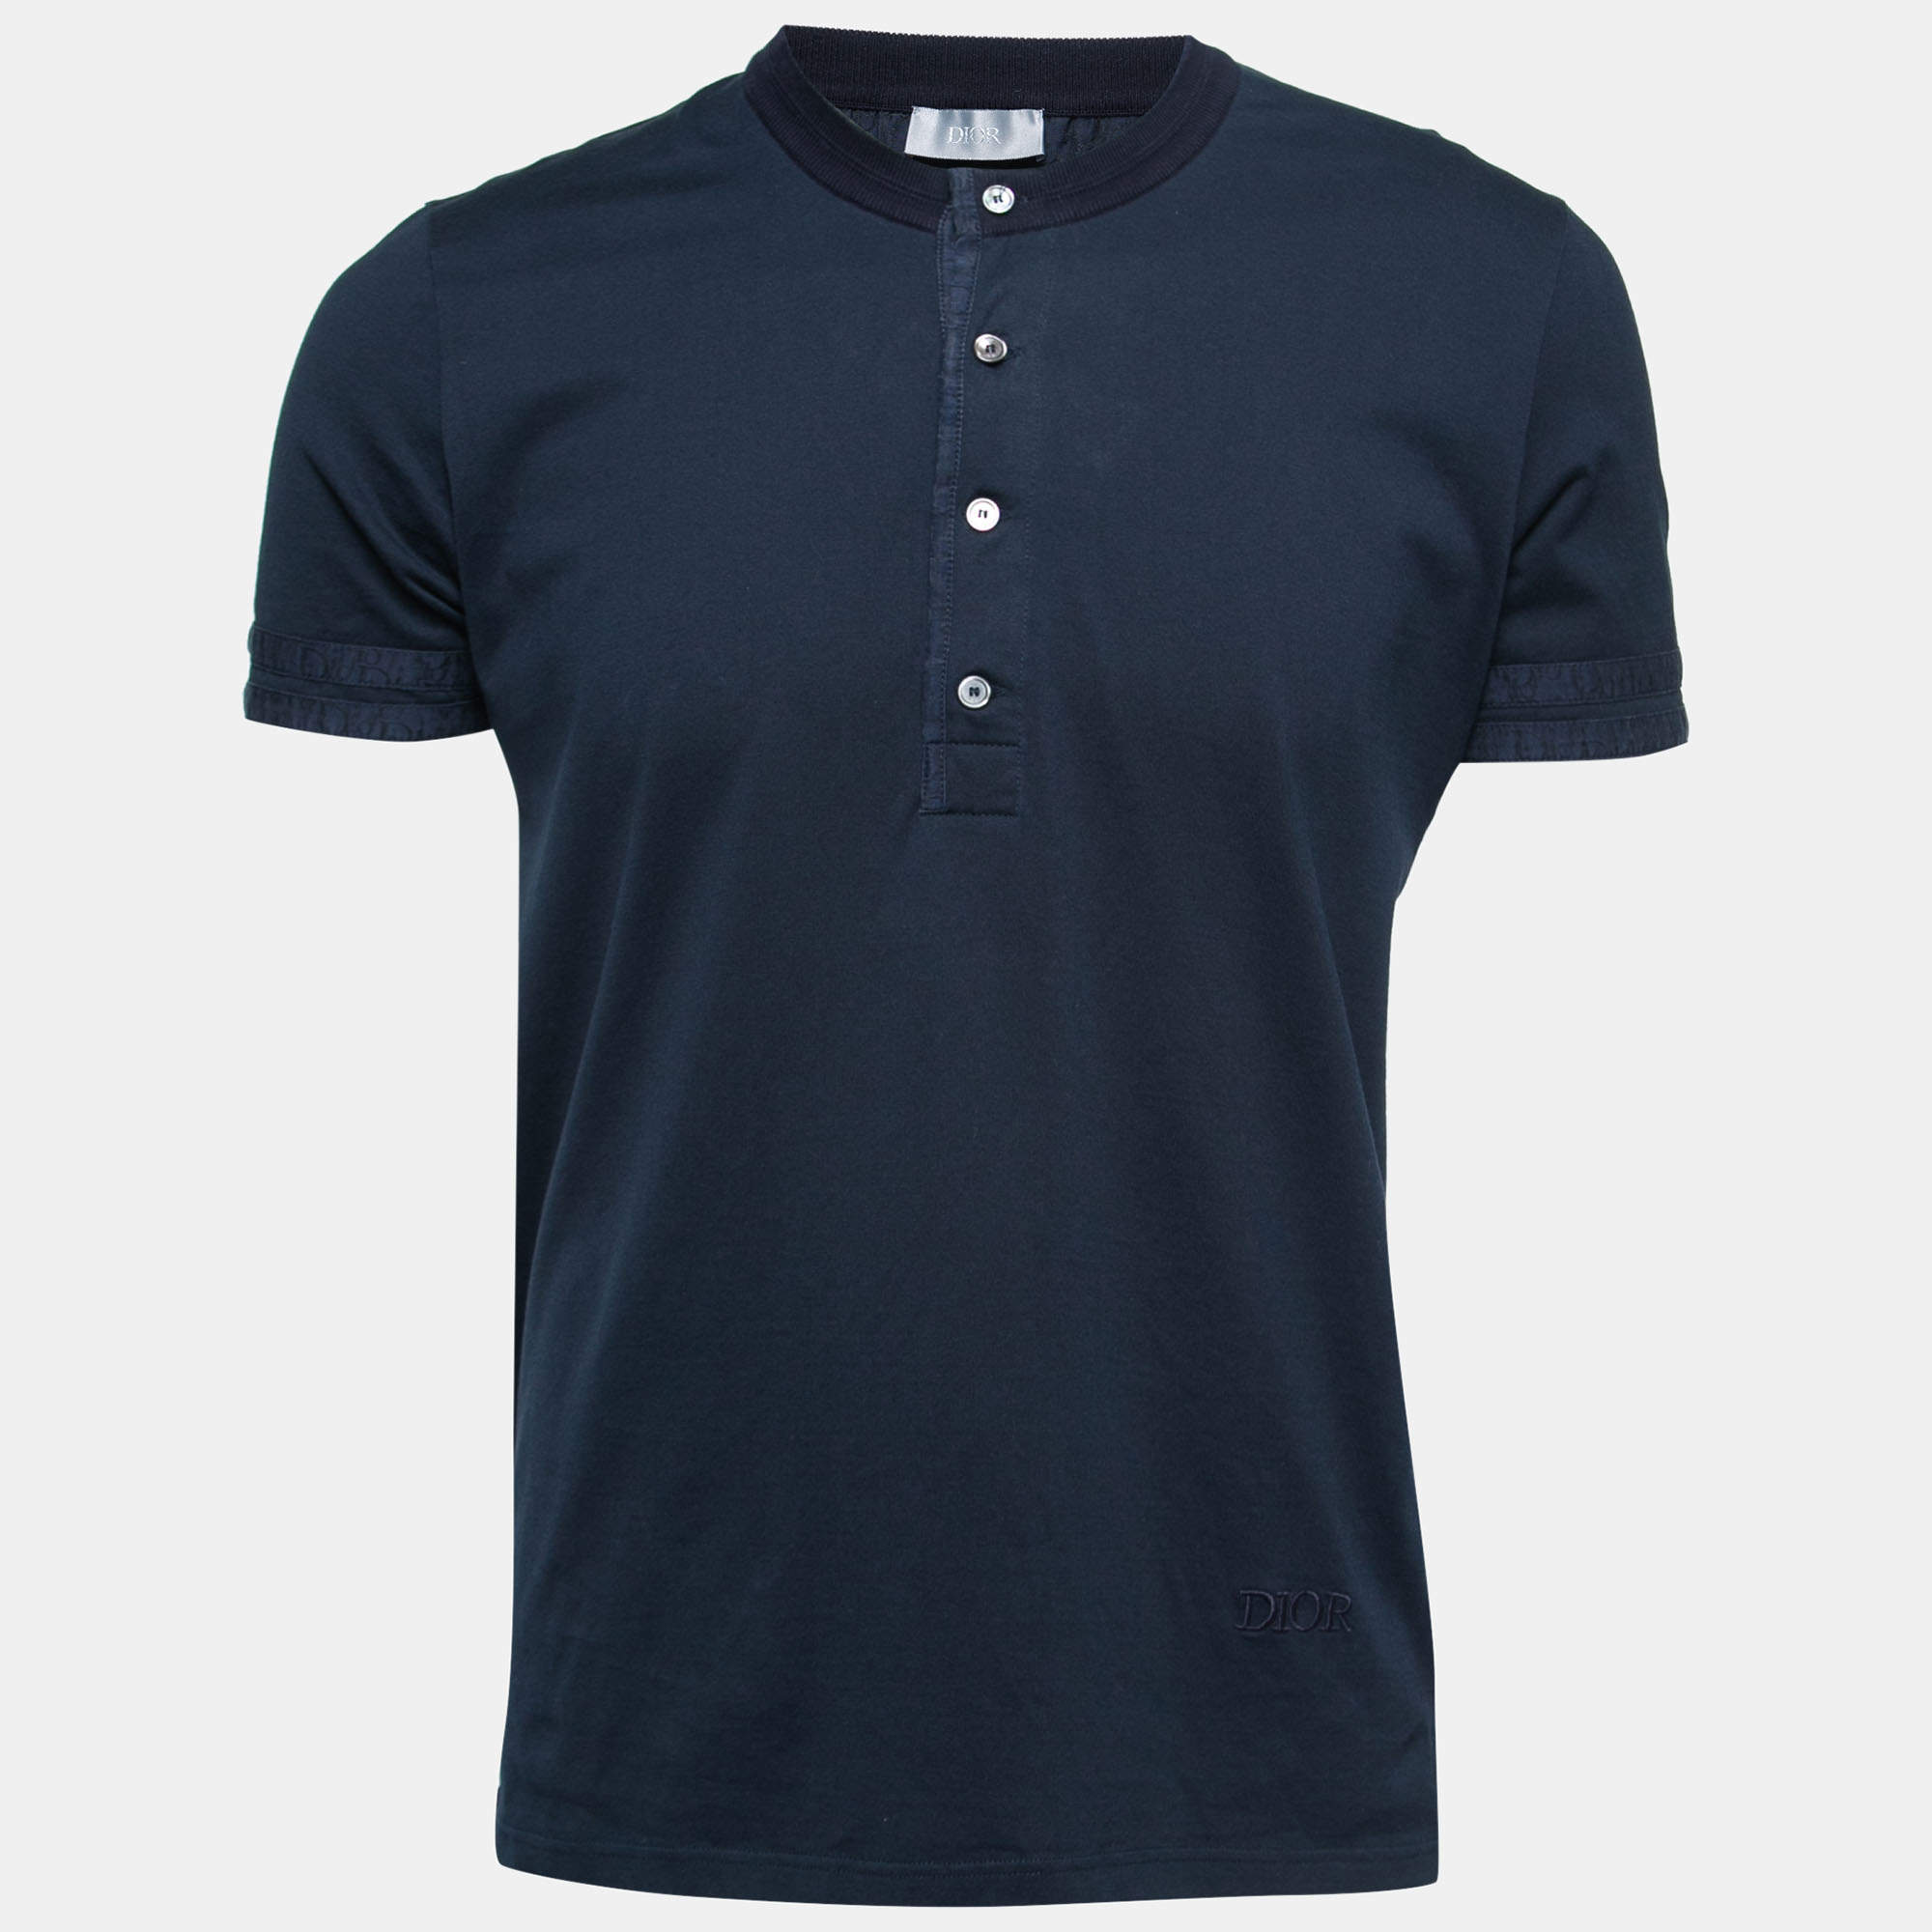 Dior Navy Blue Cotton Crewneck T-Shirt M